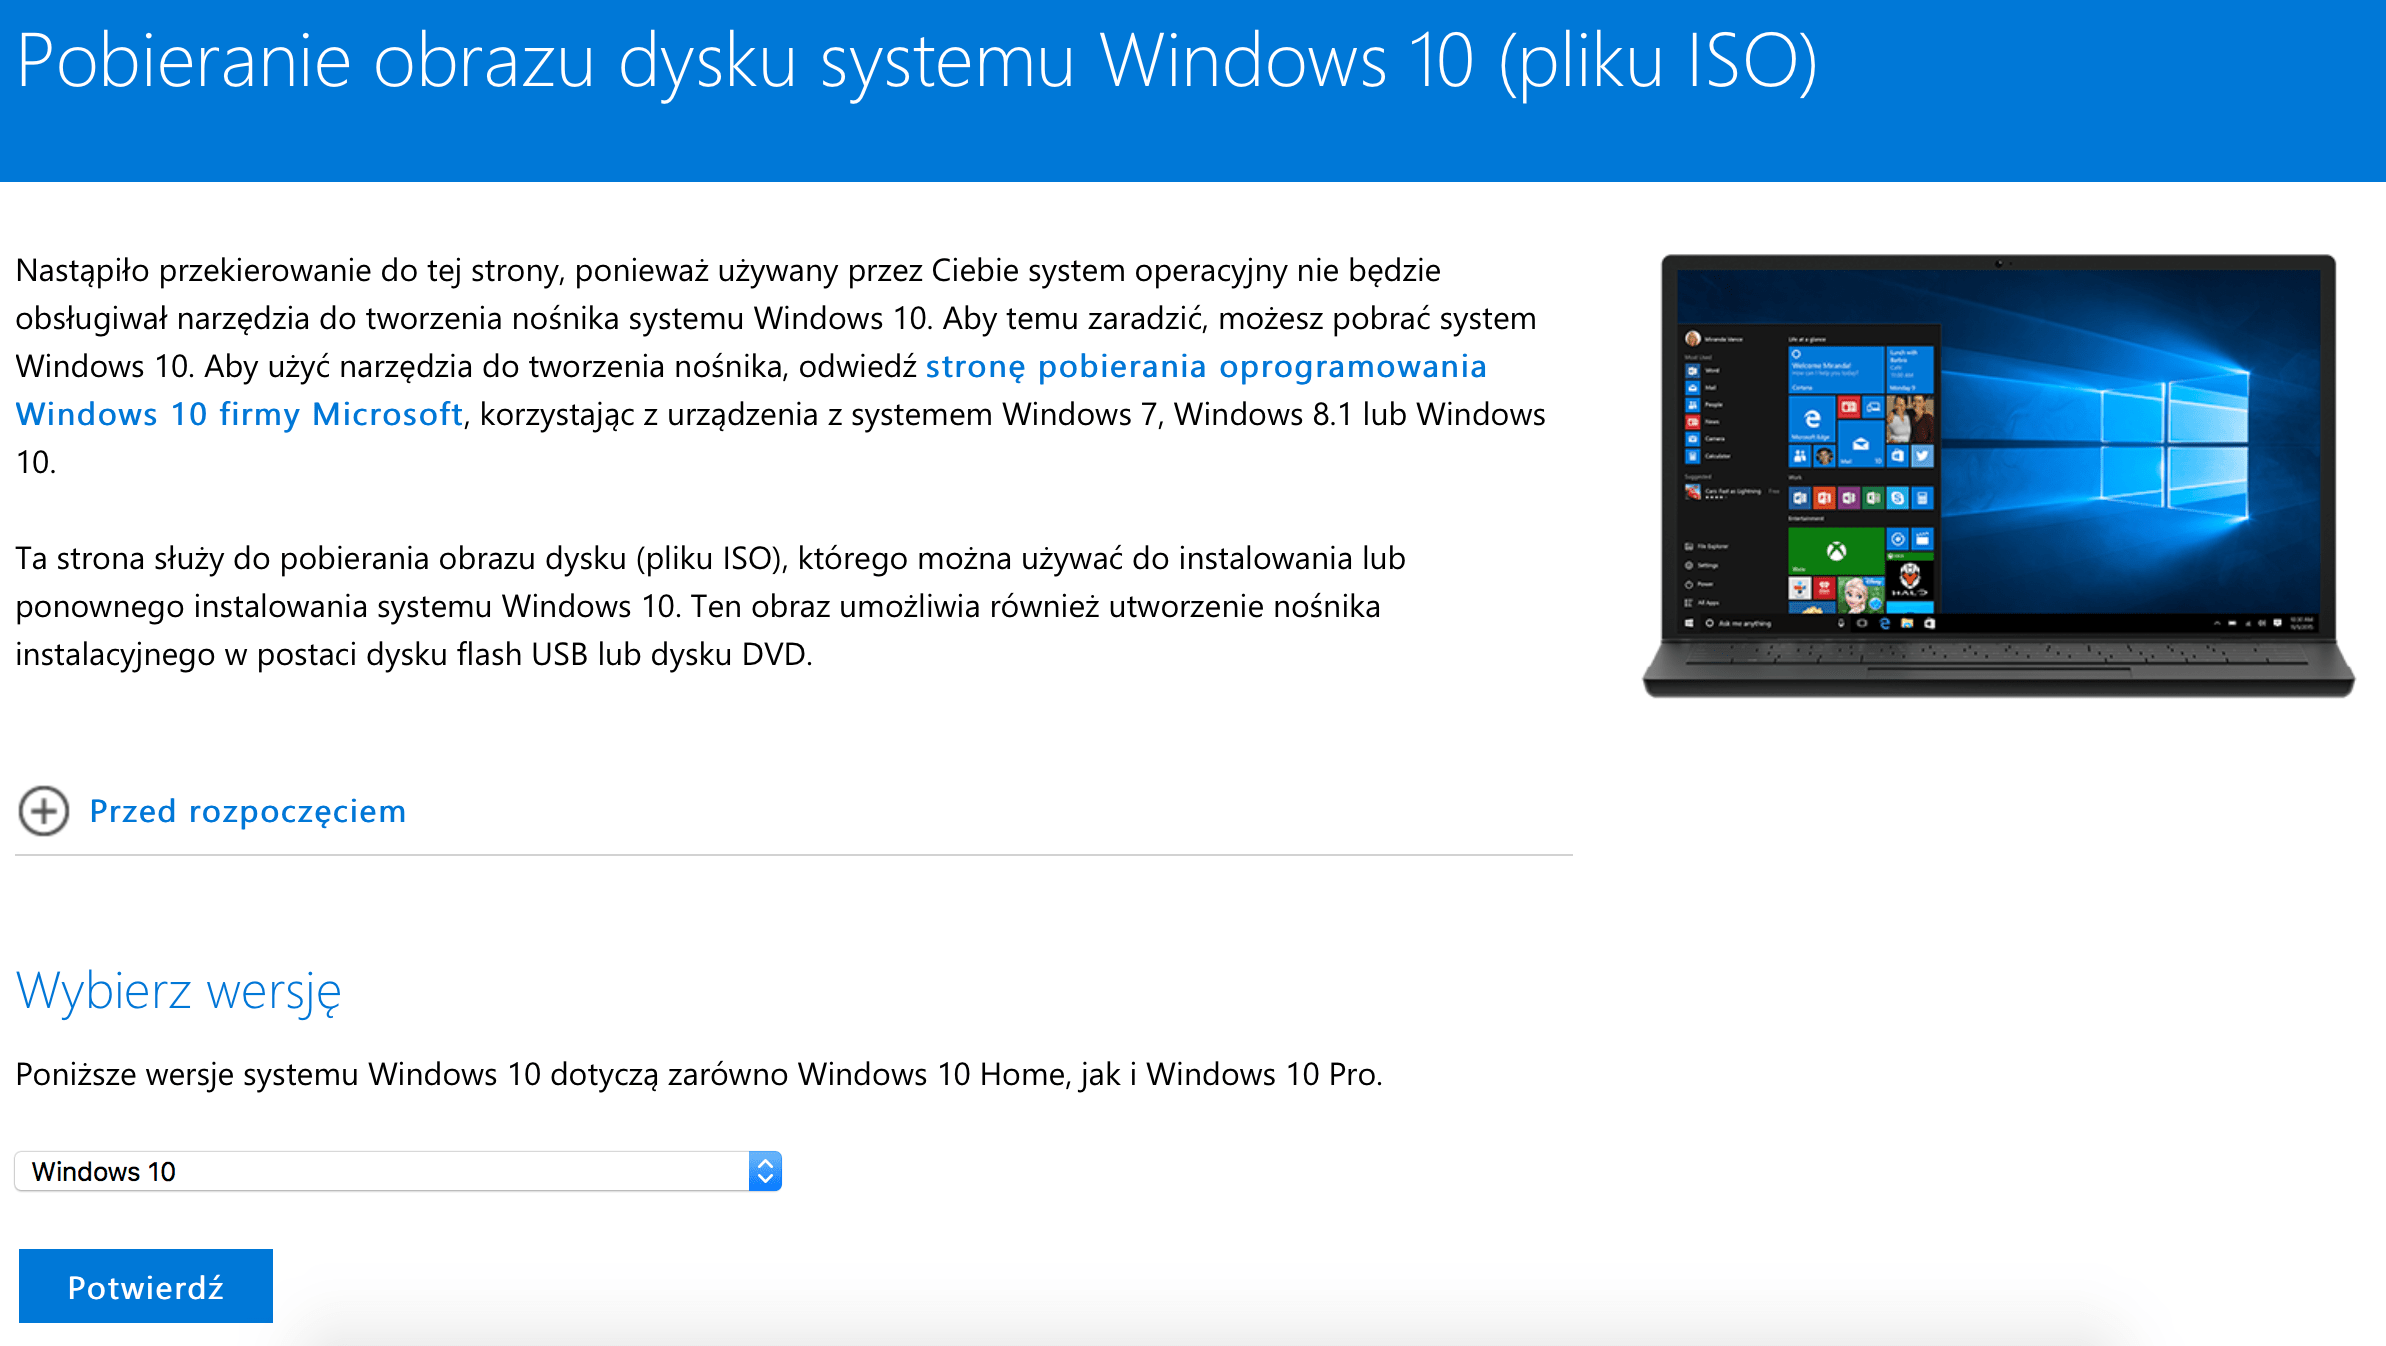 Downloading Windows 10 ISO Image